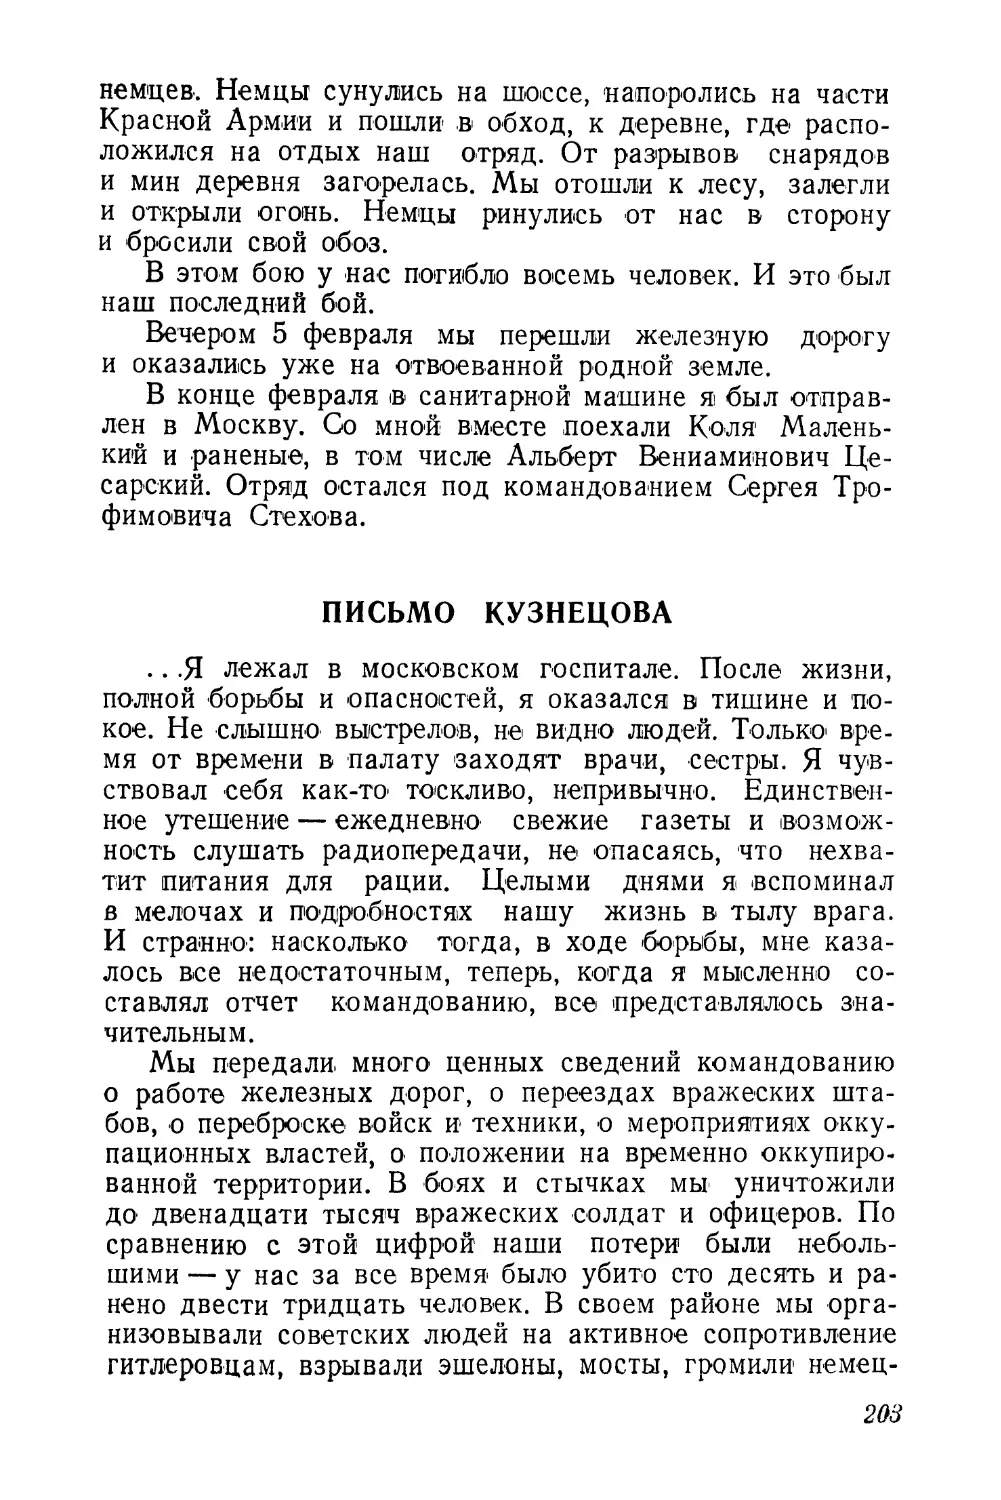 Письмо Кузнецова